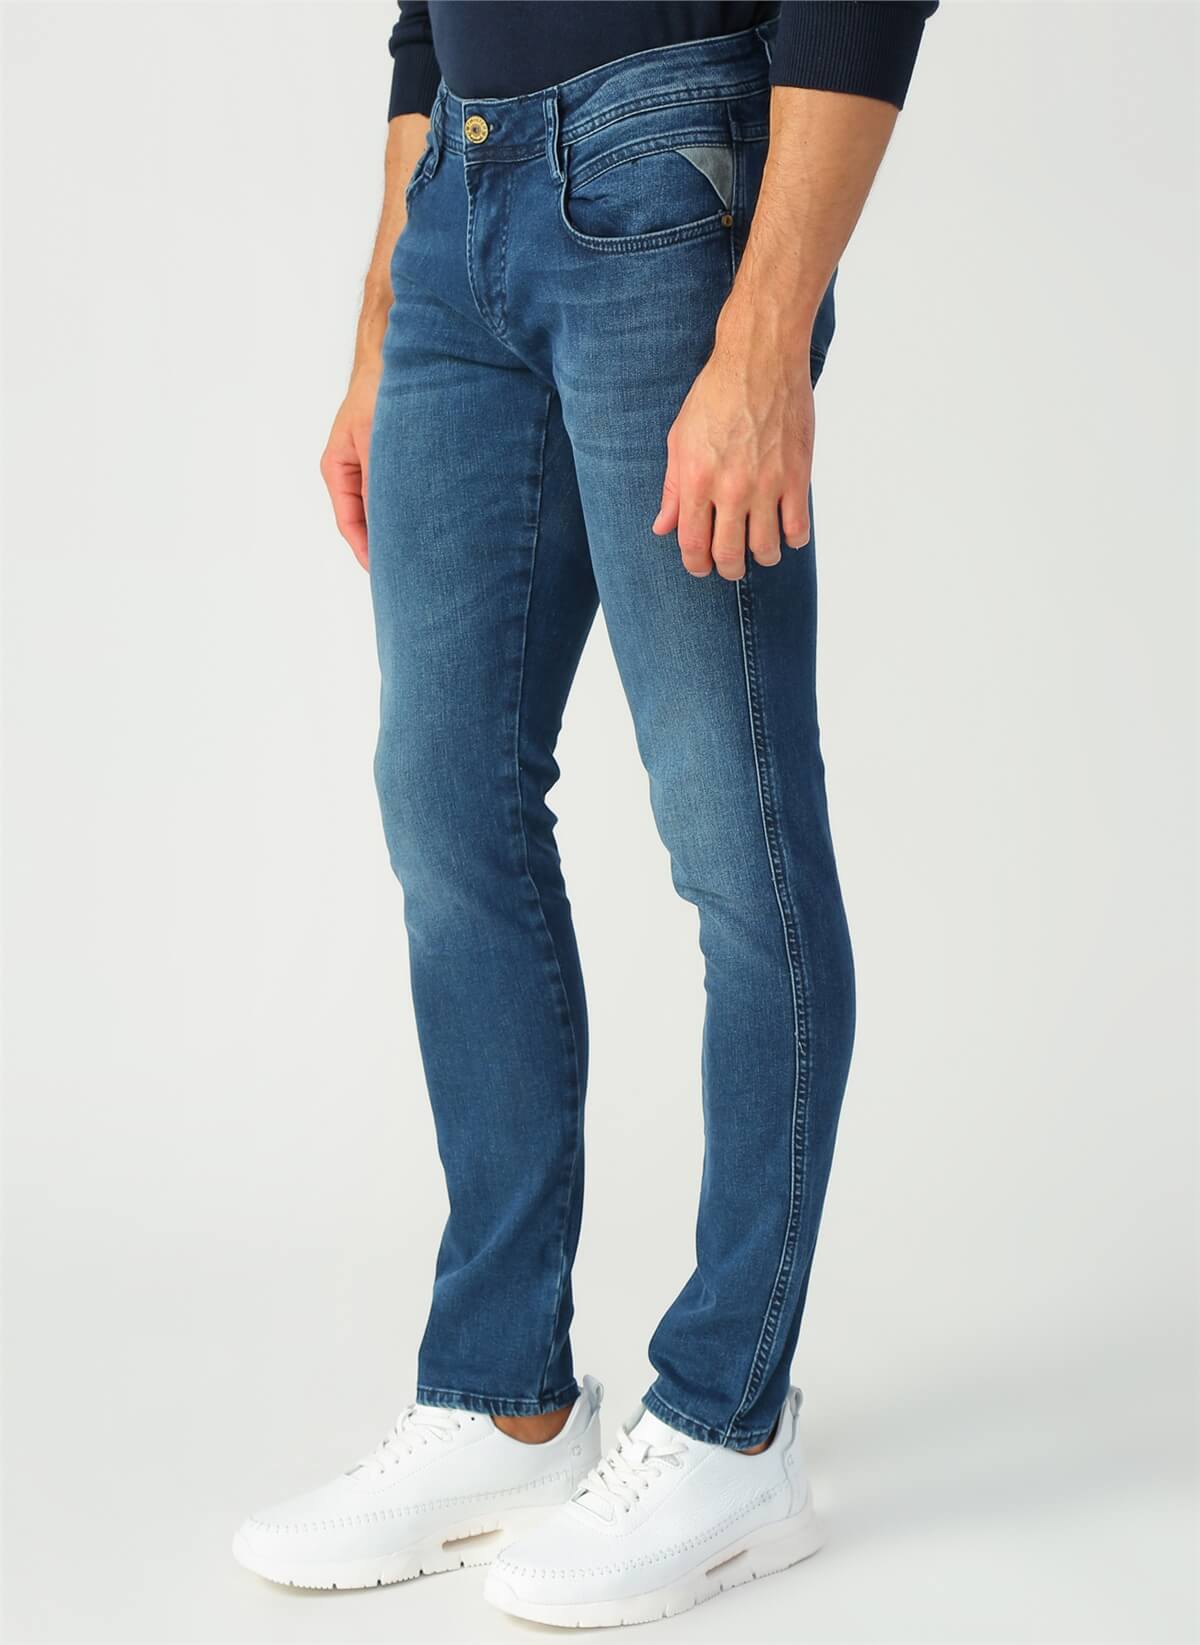 Twister Jeans PANAMA 512-03 Erkek Denim Pantolon